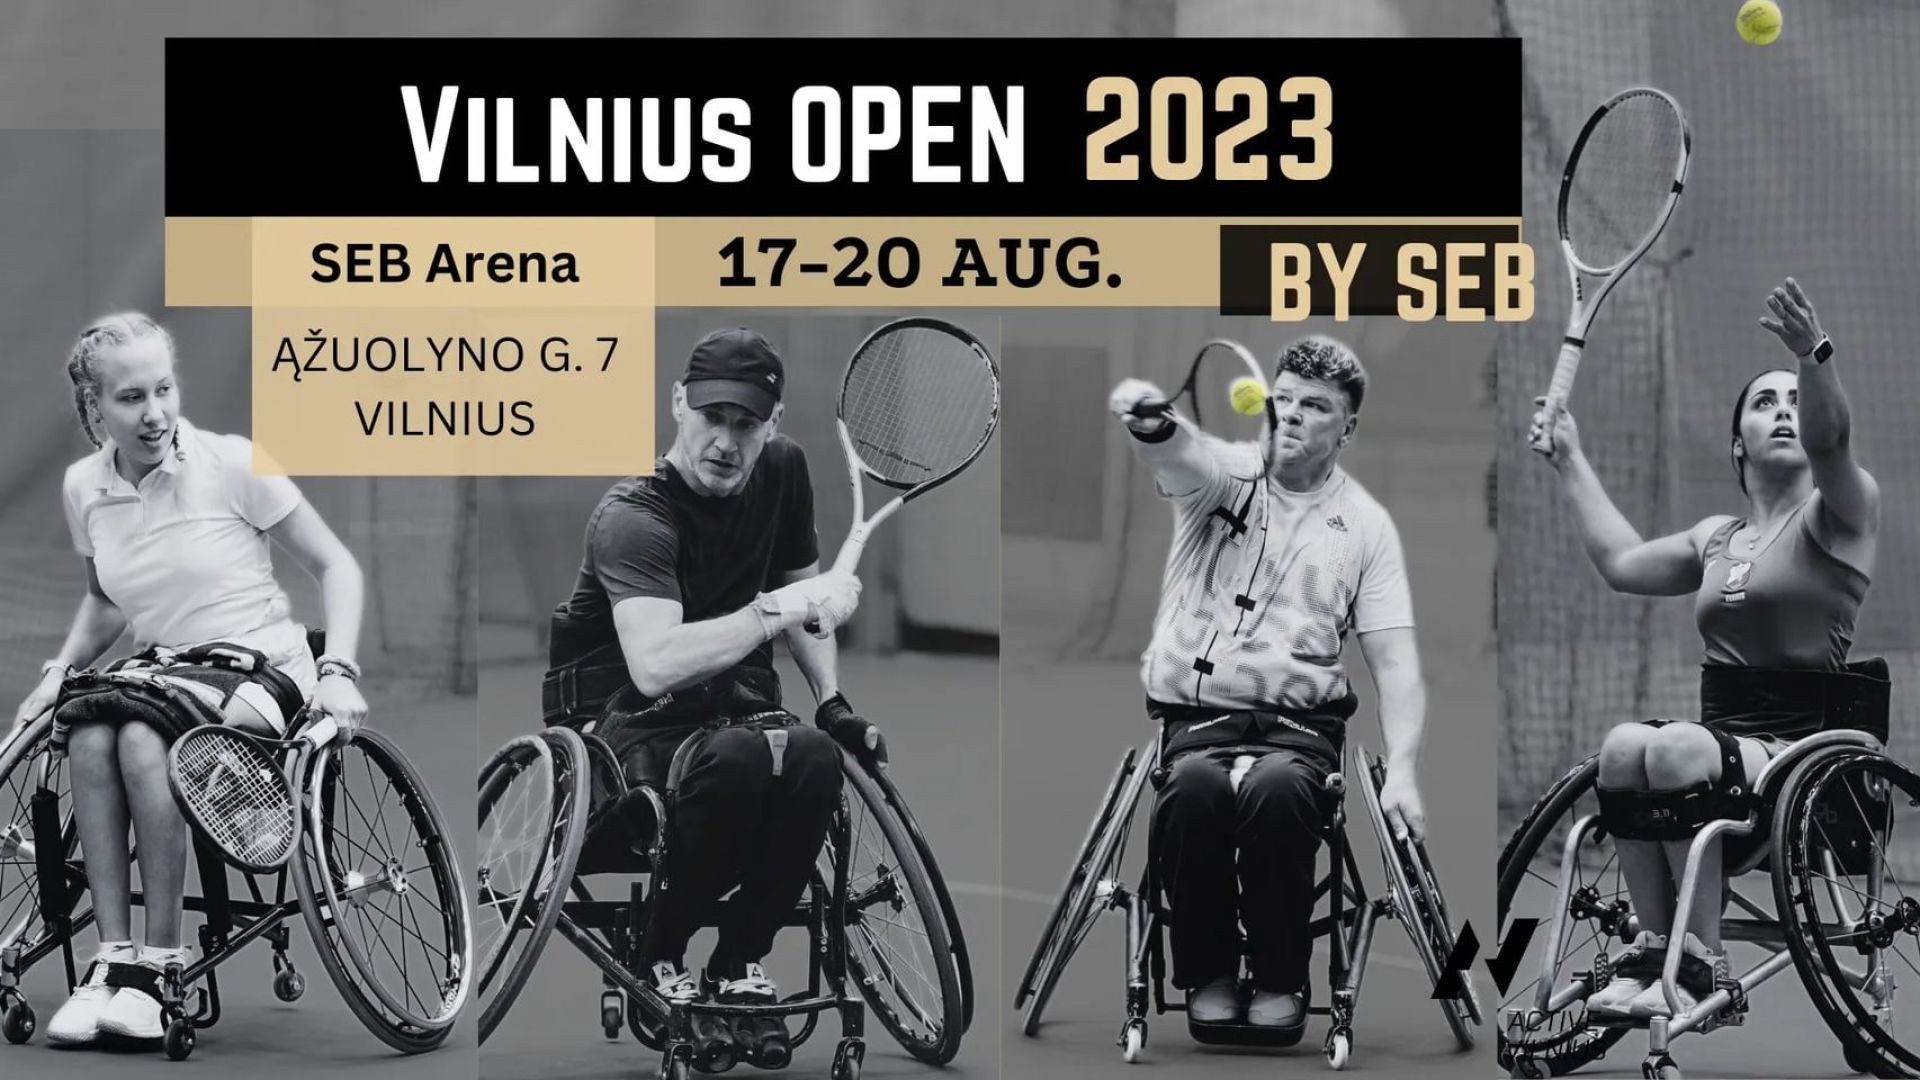 COURT 8 DAY 3 - VILNIIUS OPEN 2023 BY SEB